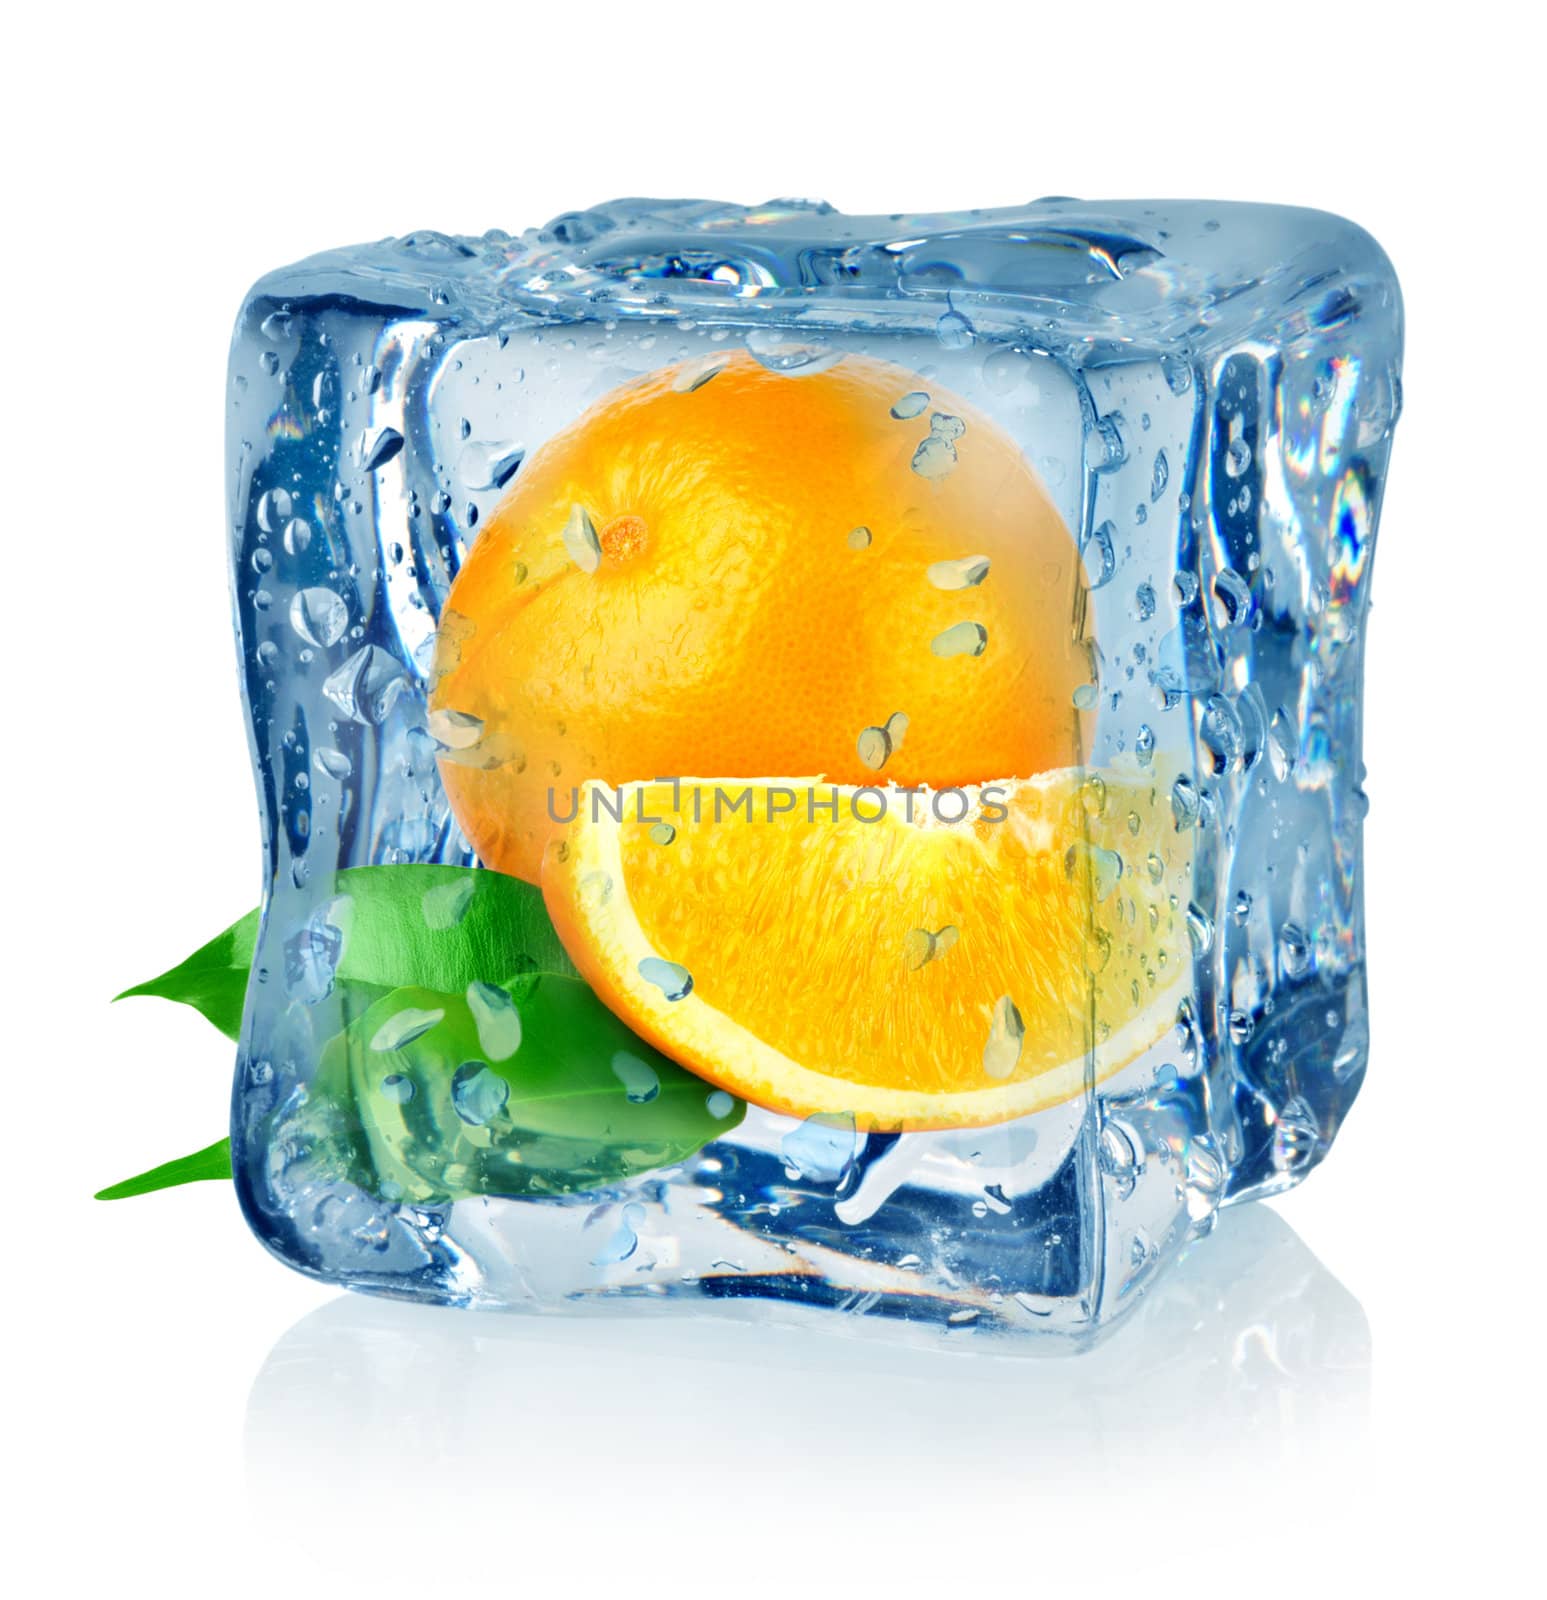 Ice cube and orange isolated on a white background